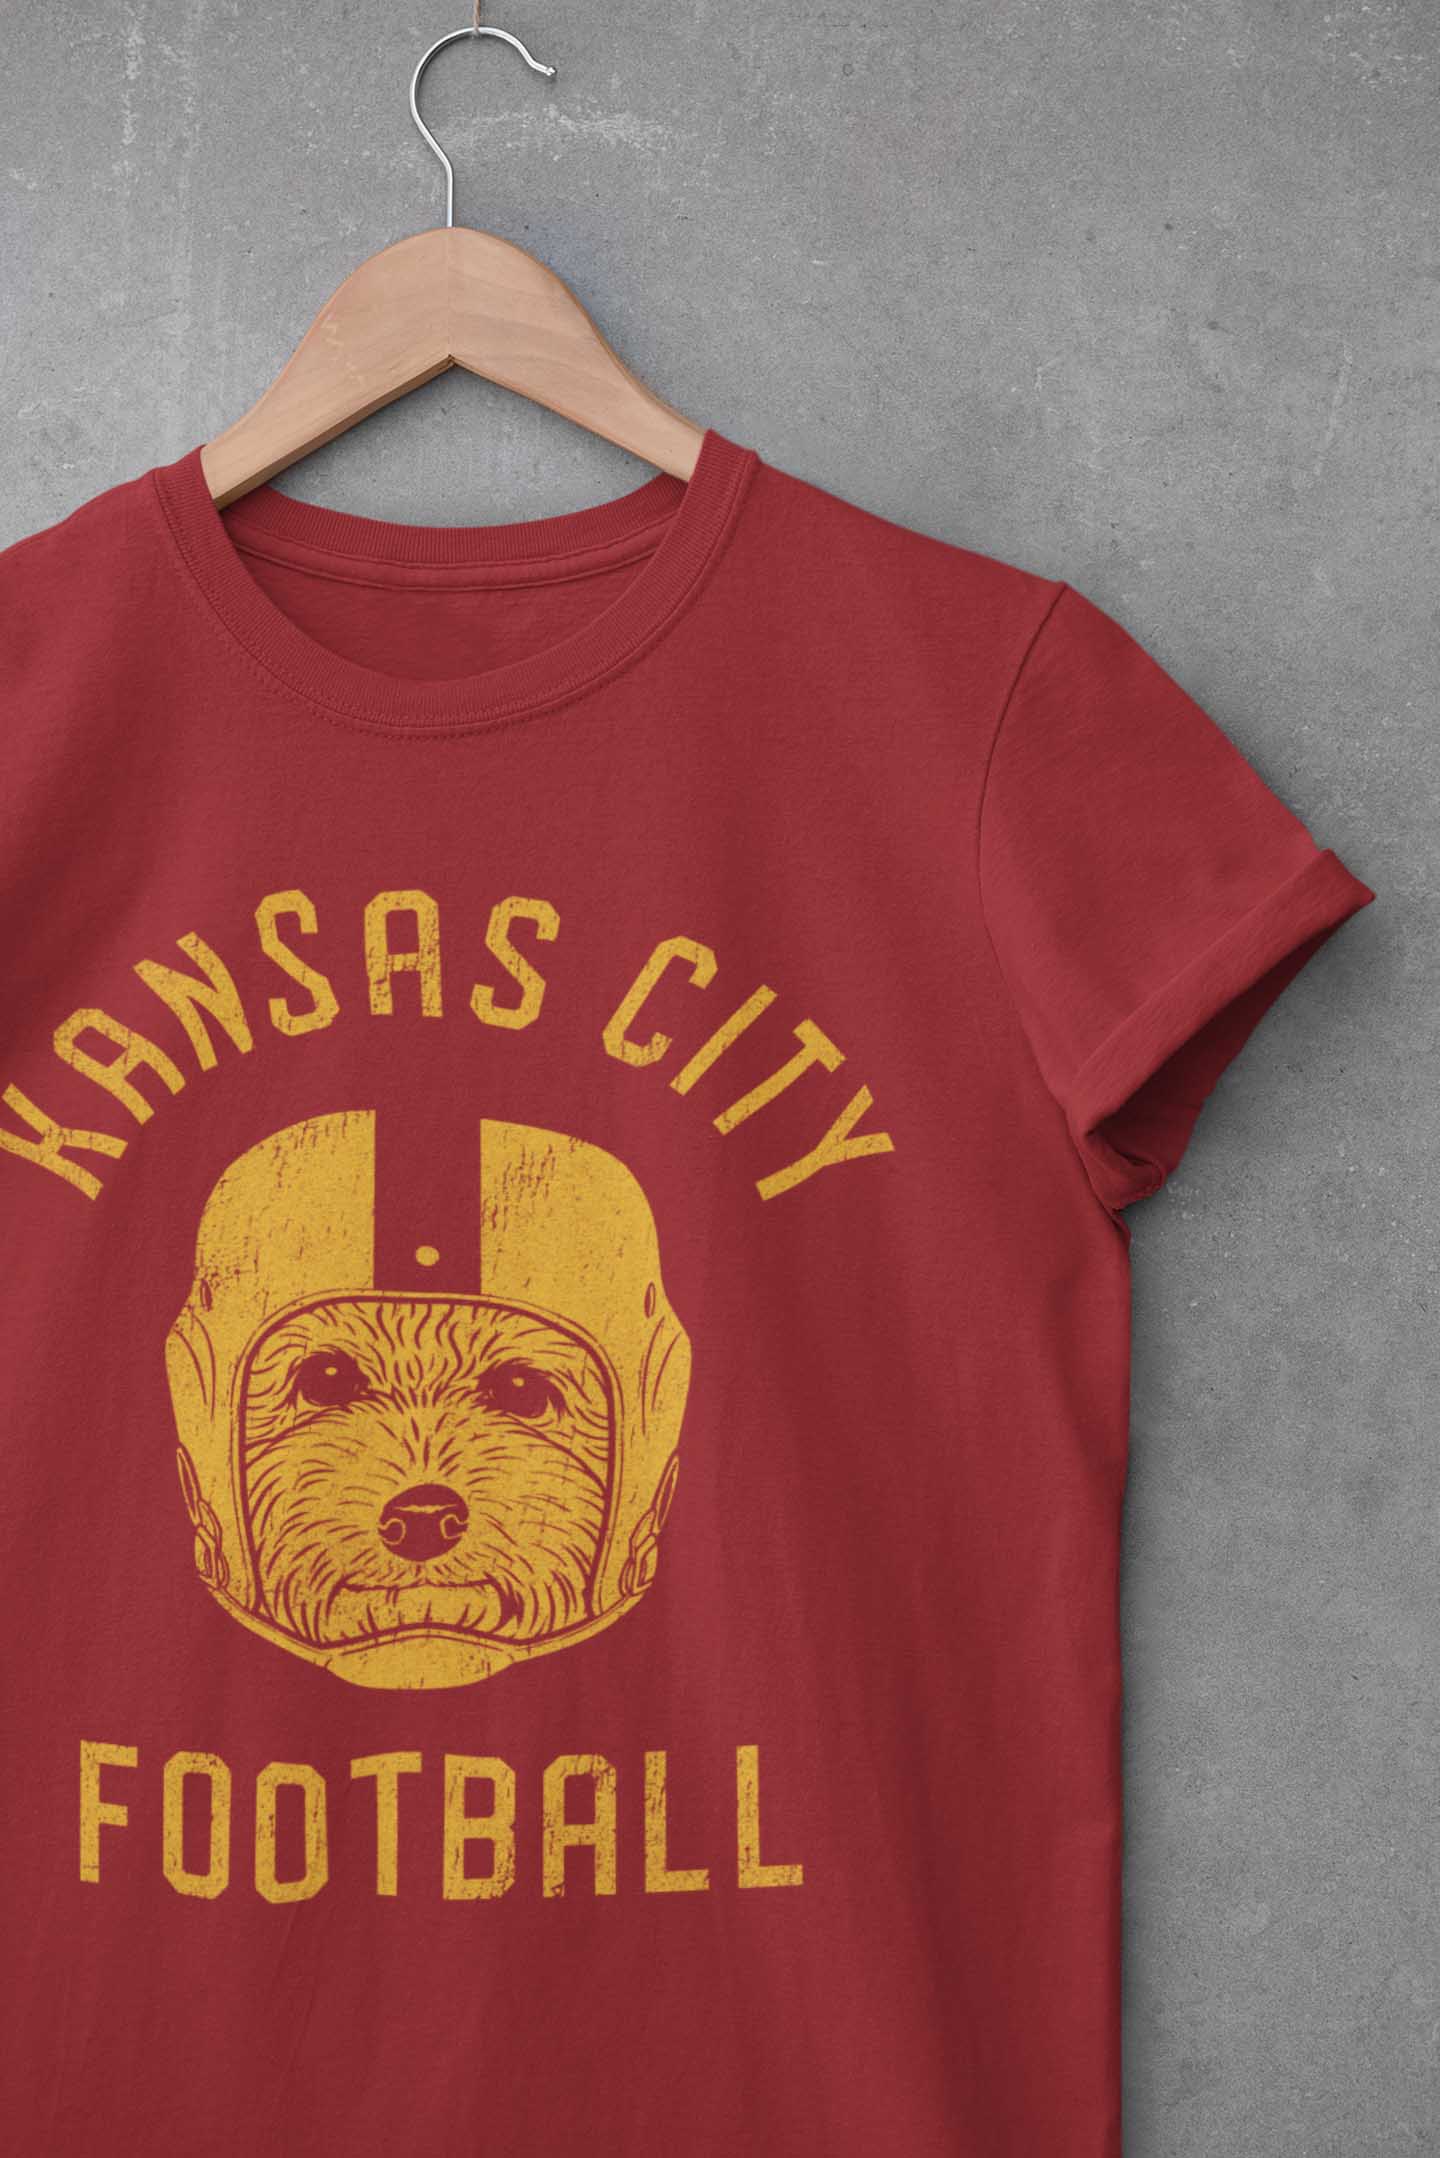 Kansas City Football Poodle T-Shirt